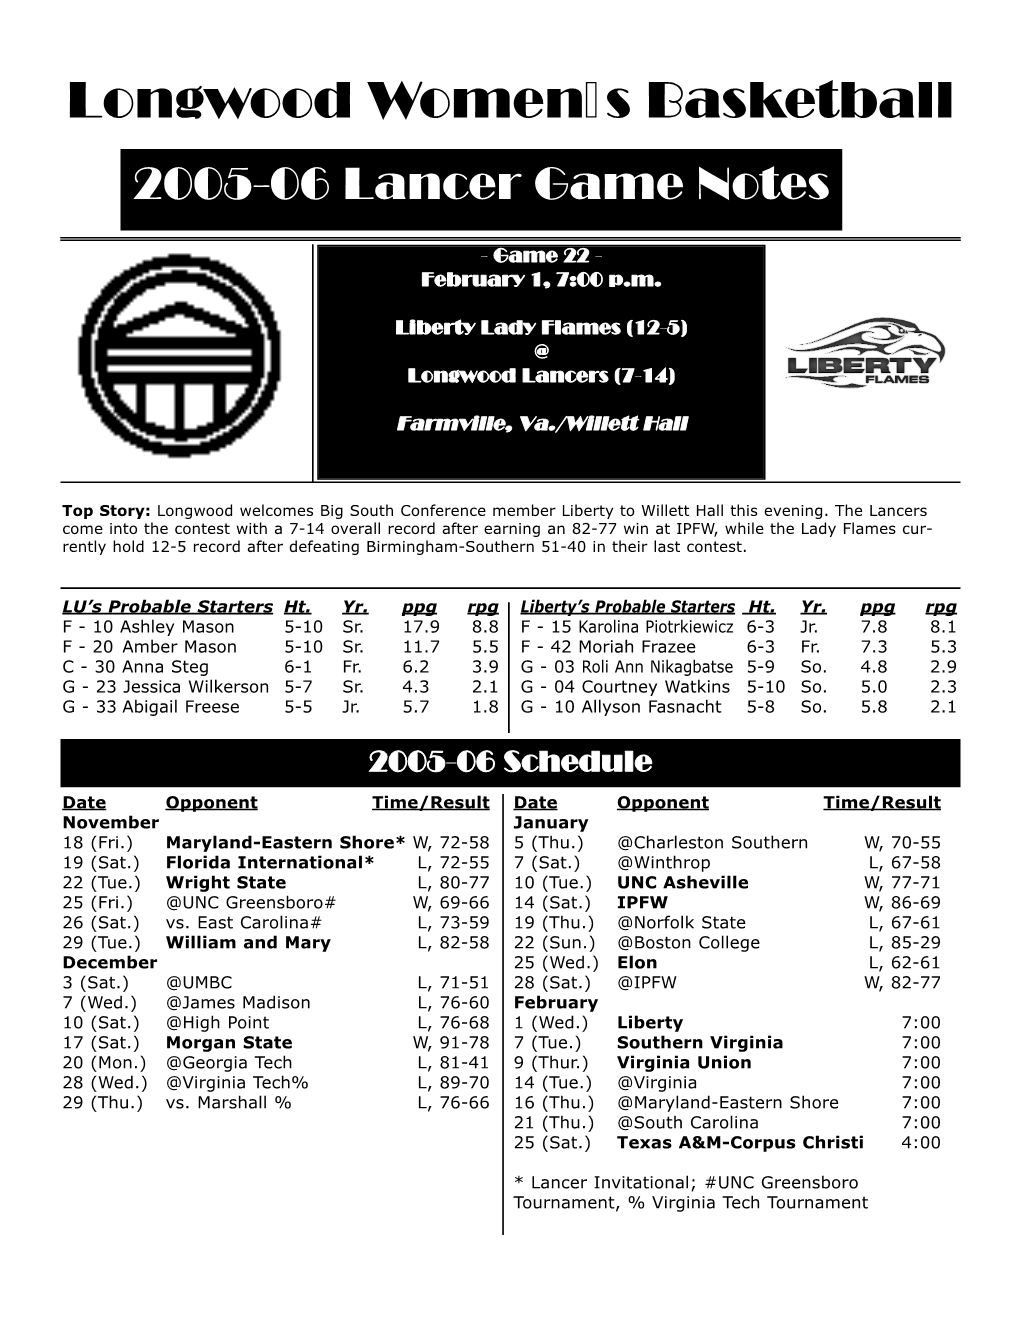 Longwood Women S Basketball 2005-06 Lancer Game Notes